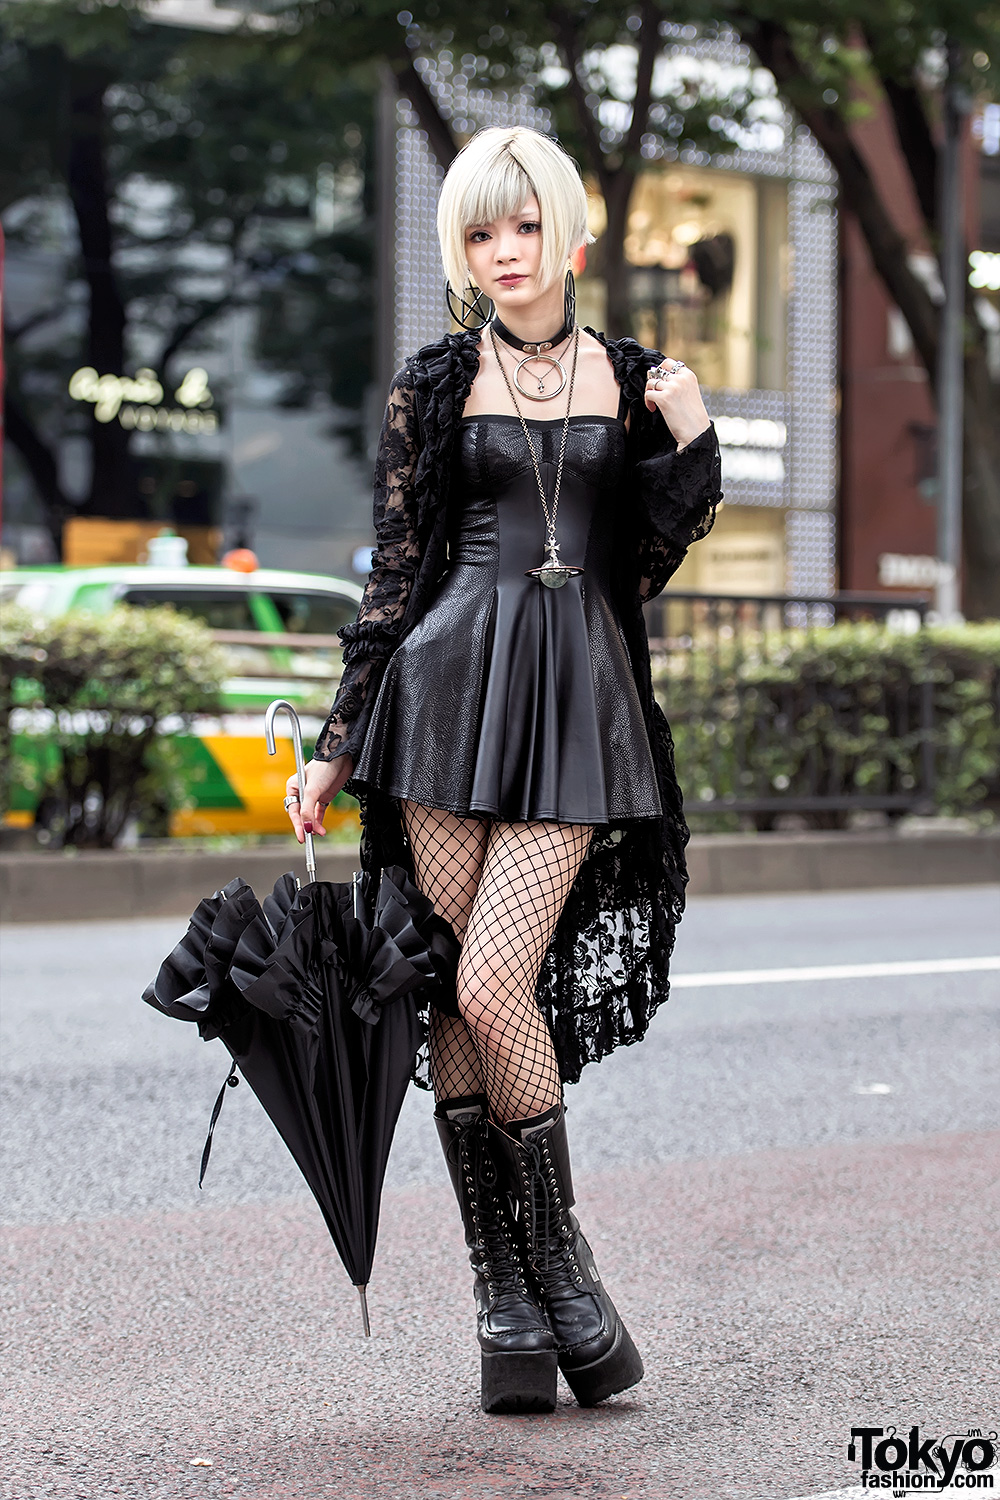 Gothic Harajuku Girl in Black Lace, Mini Dress, Platform Boots